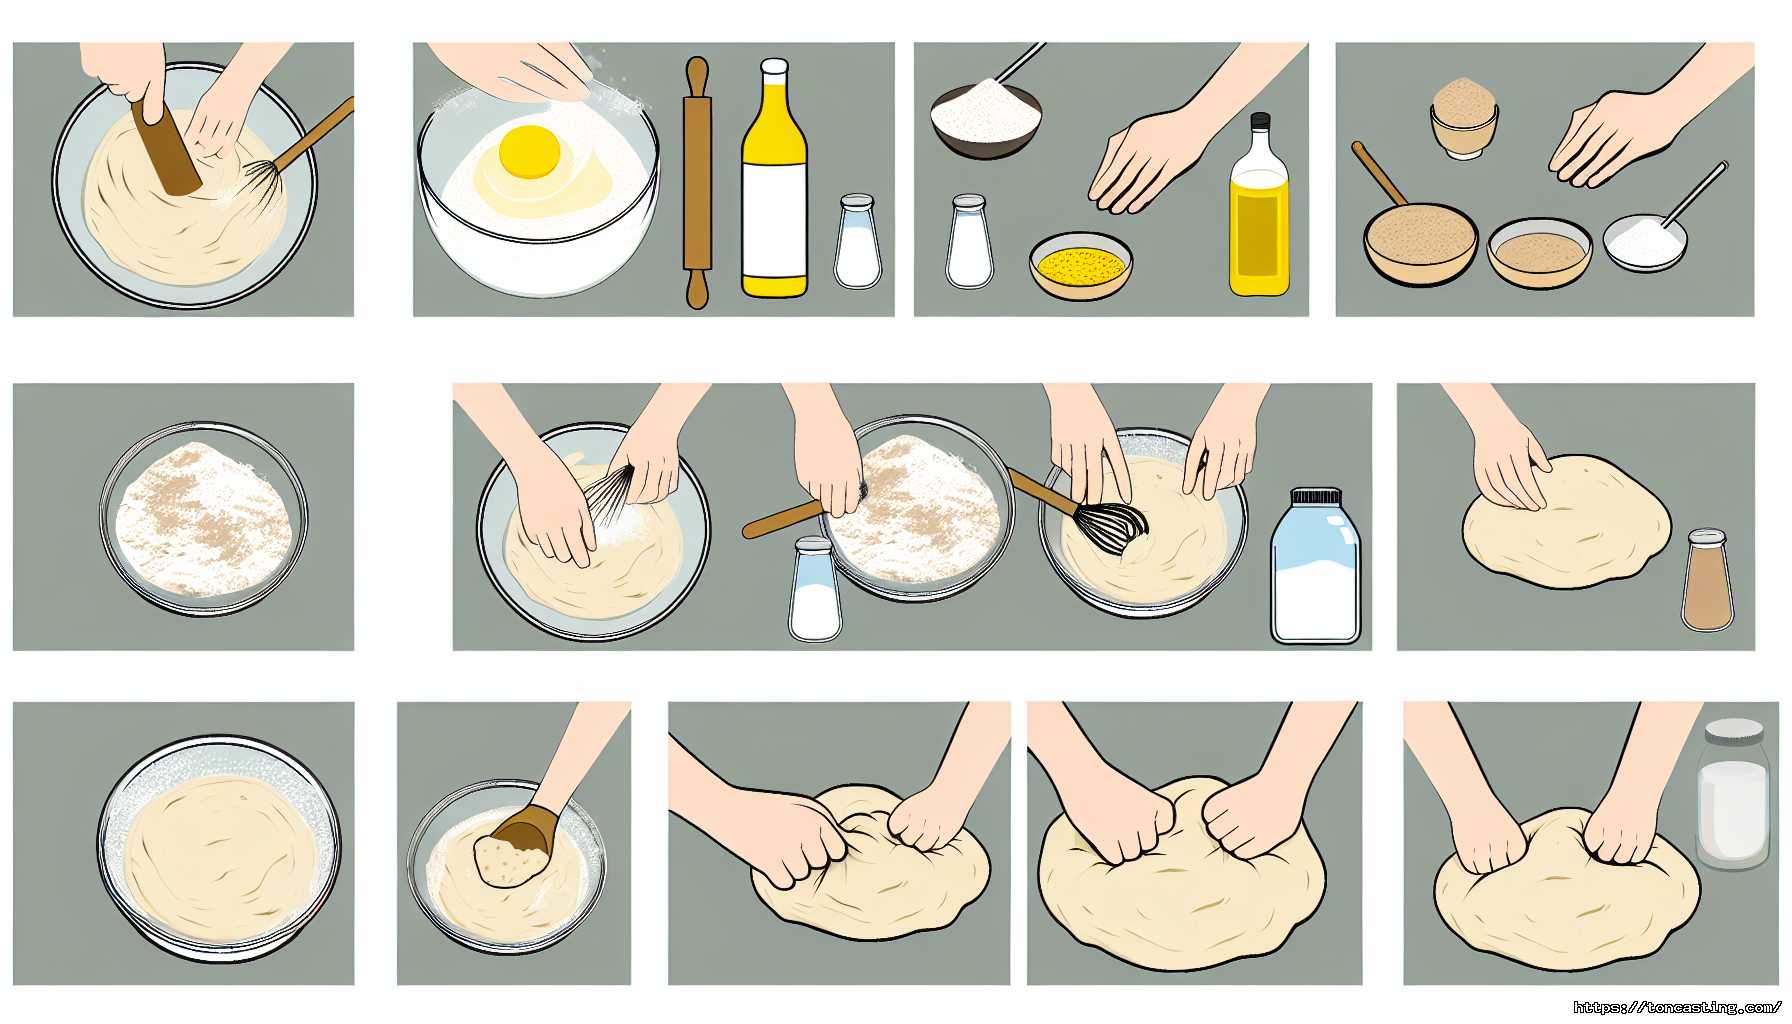 The easy recipe for homemade bread dough